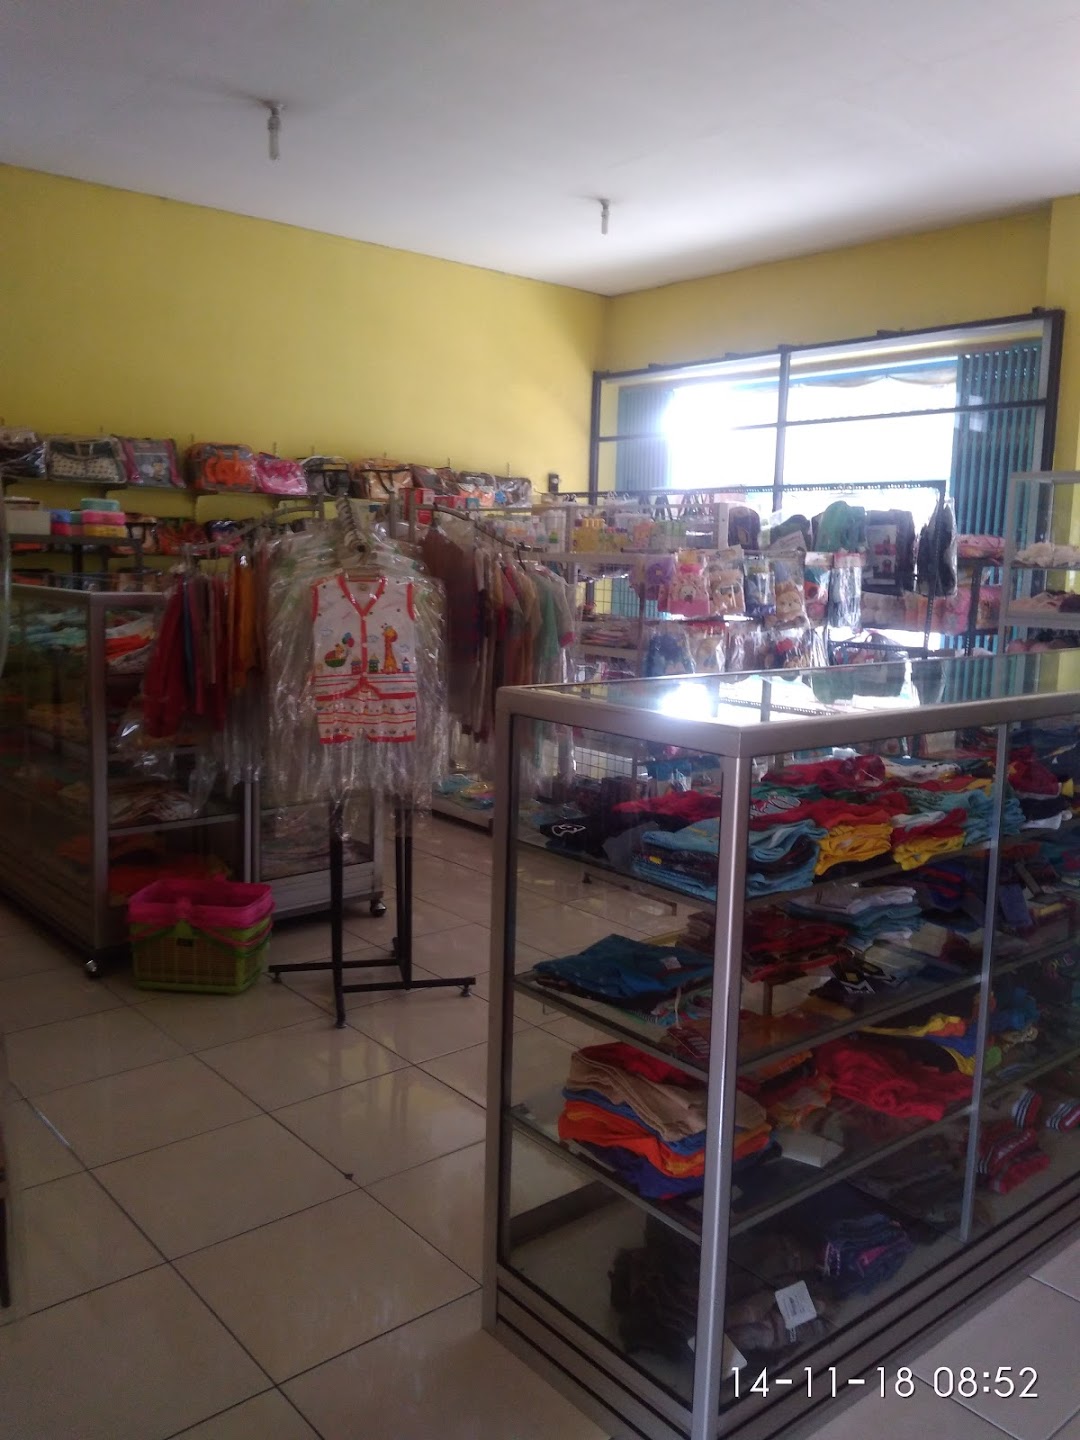 Mulyo Baby Shop